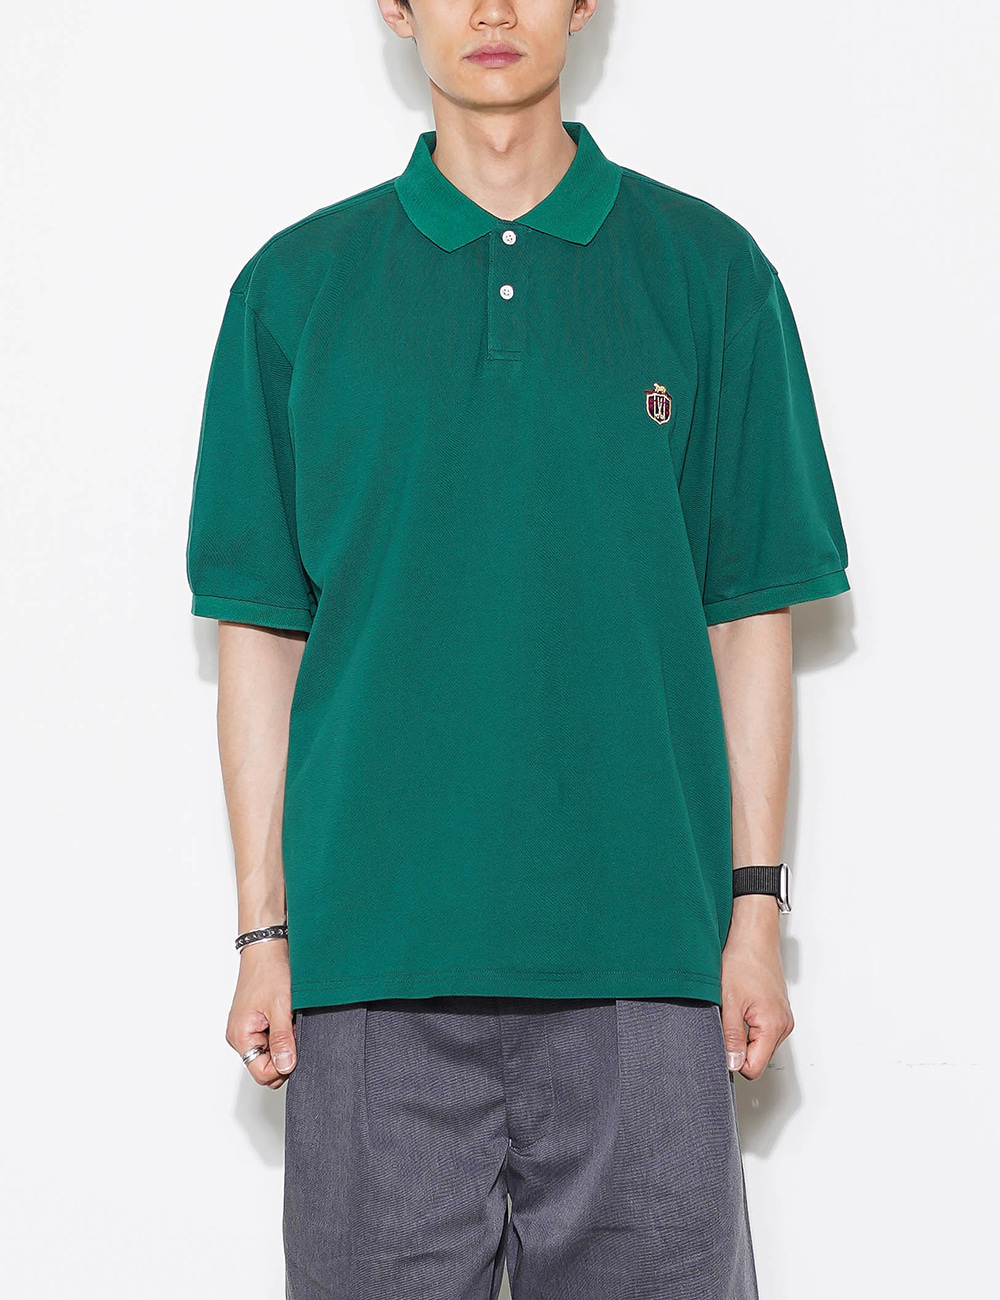 CRST Polo Shirts (Green)